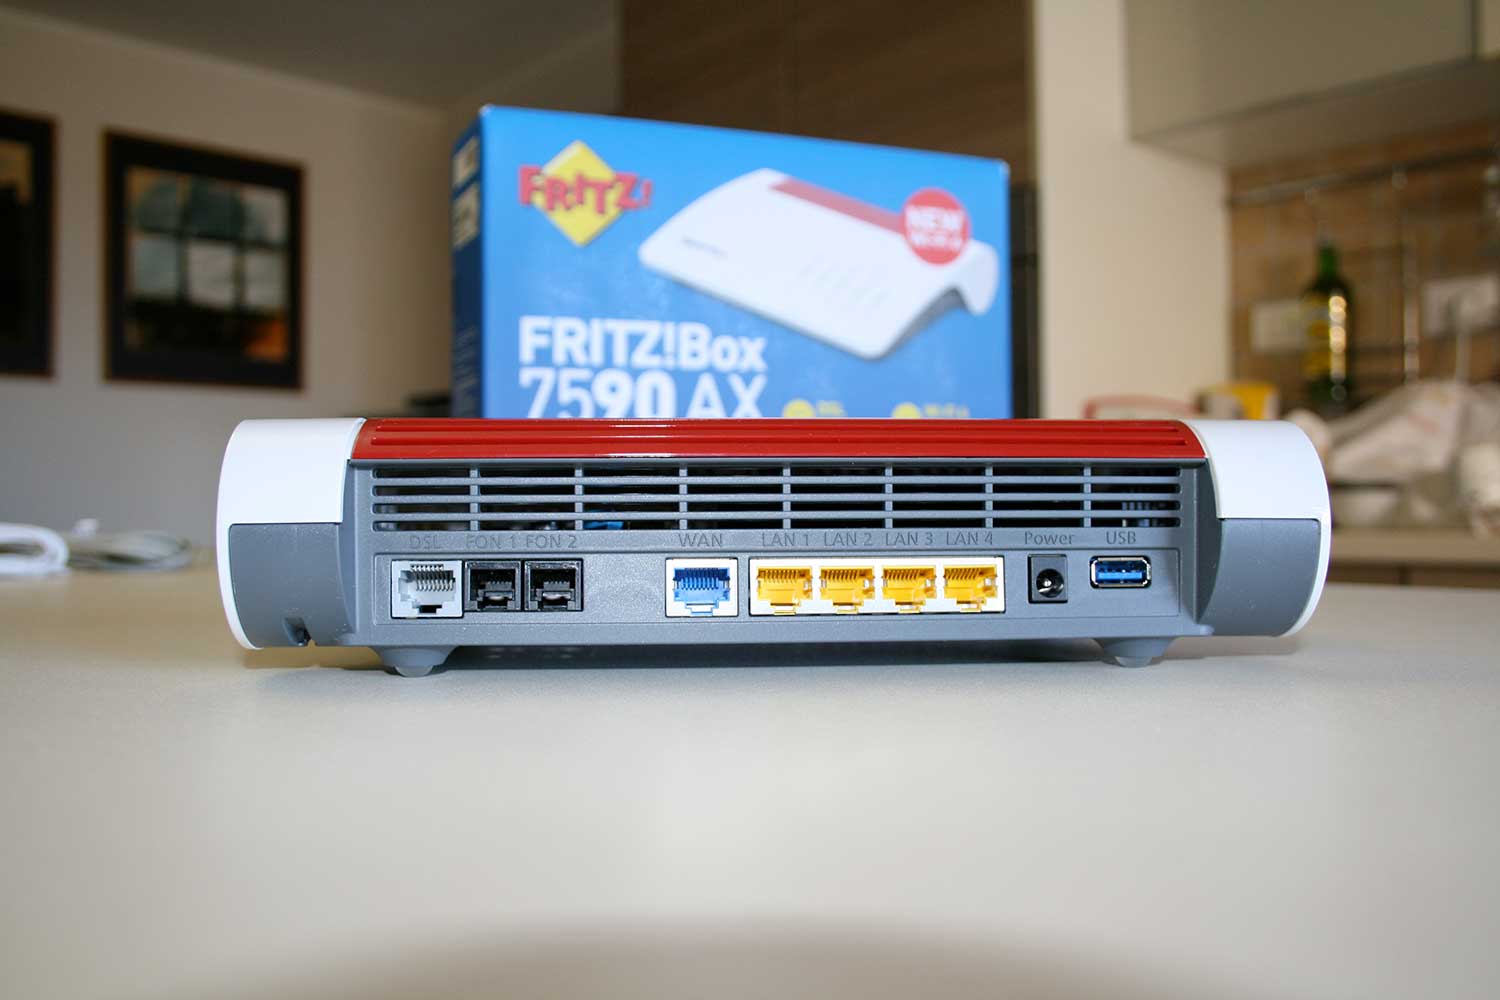 Recensione Fritz!Box 7590 AX, modem-router Wi-Fi 6 super versatile